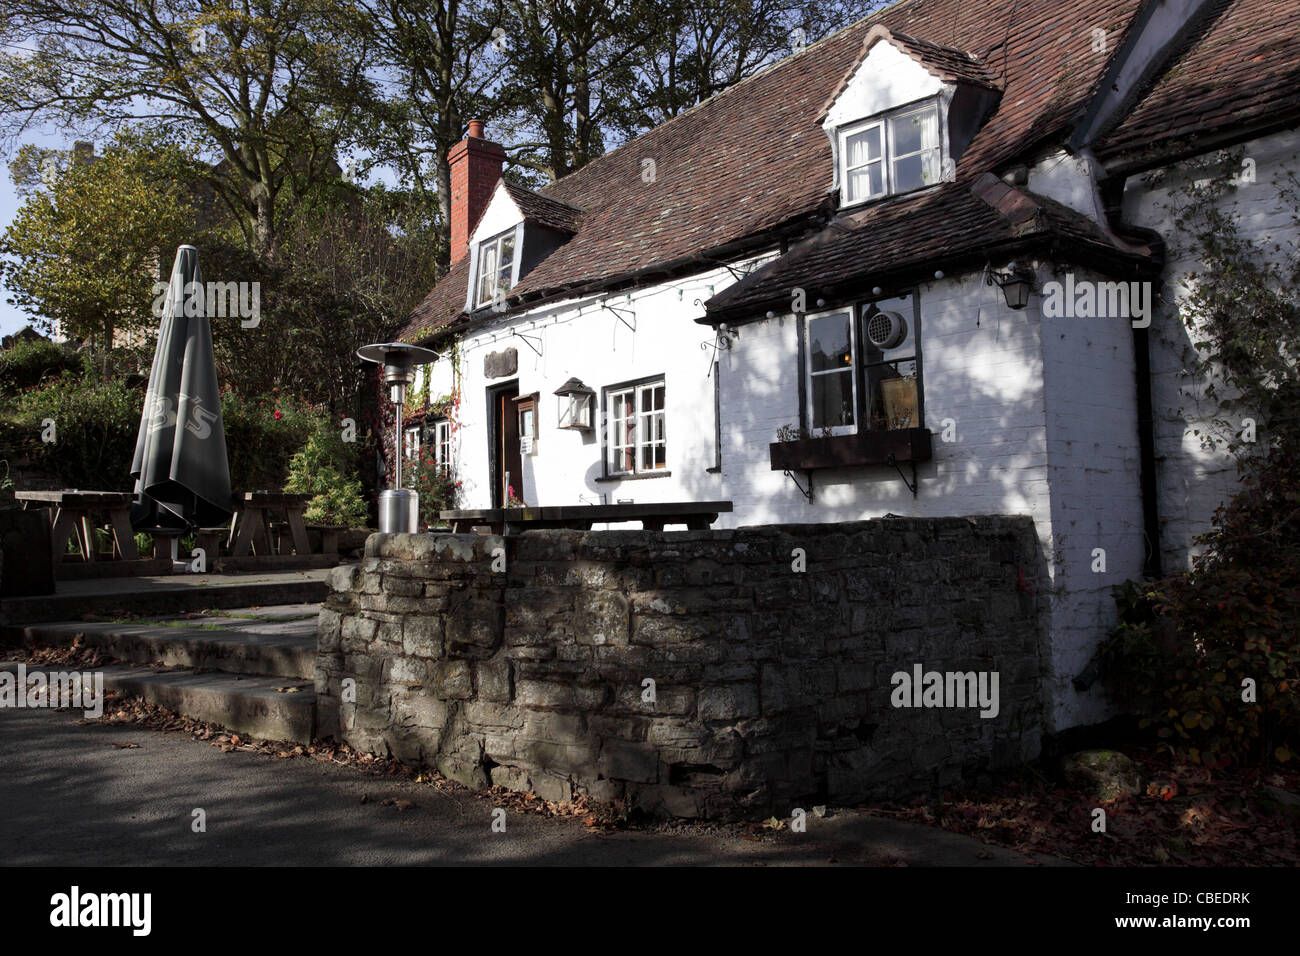 The exterior of The Royal Oak public house in the village of Cardington, Shropshire, England. Stock Photo